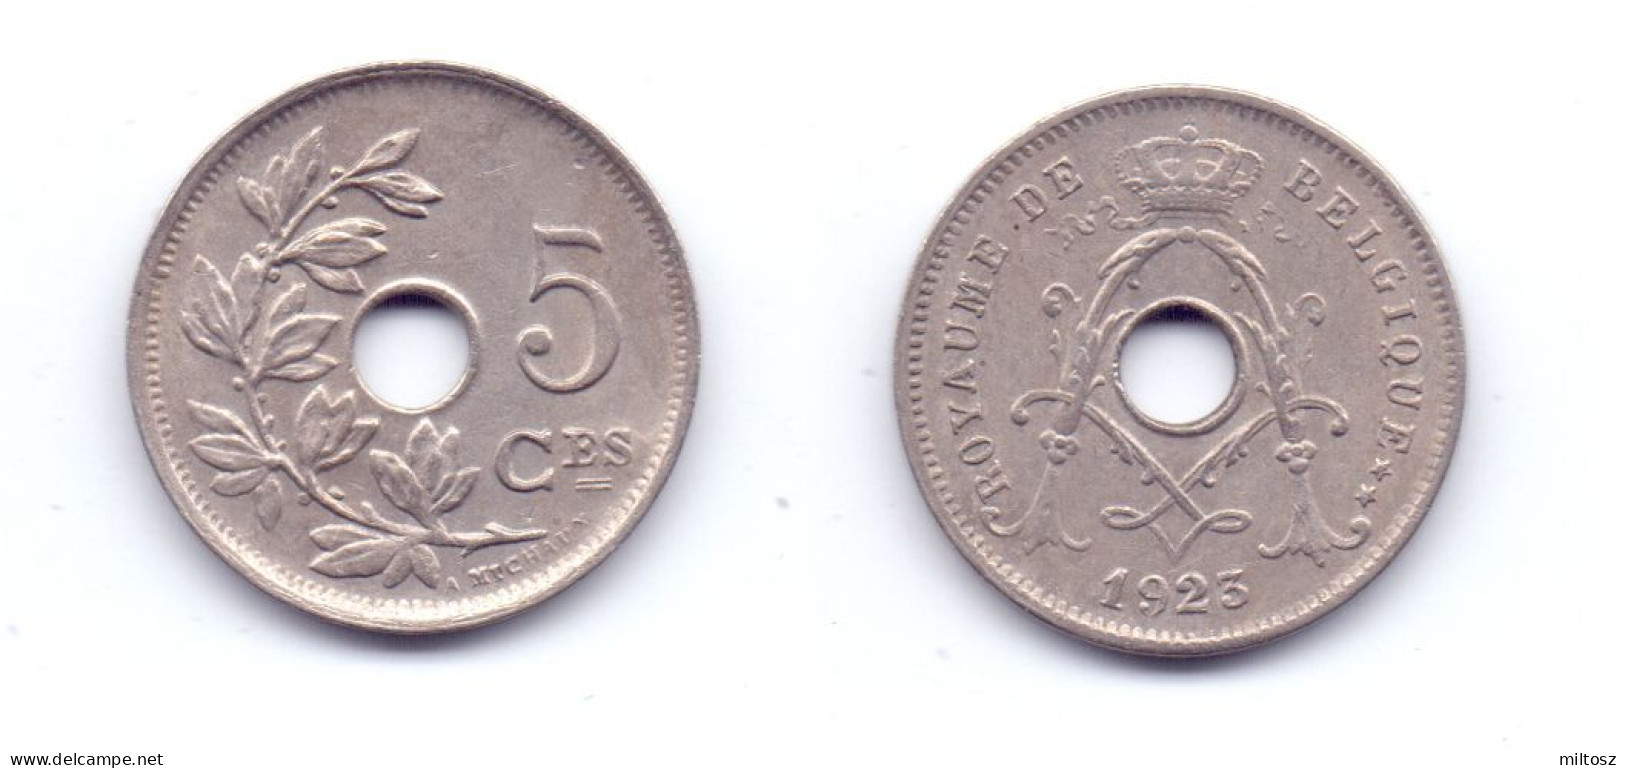 Belgium 5 Centimes 1923 (French Legend) - 5 Cents